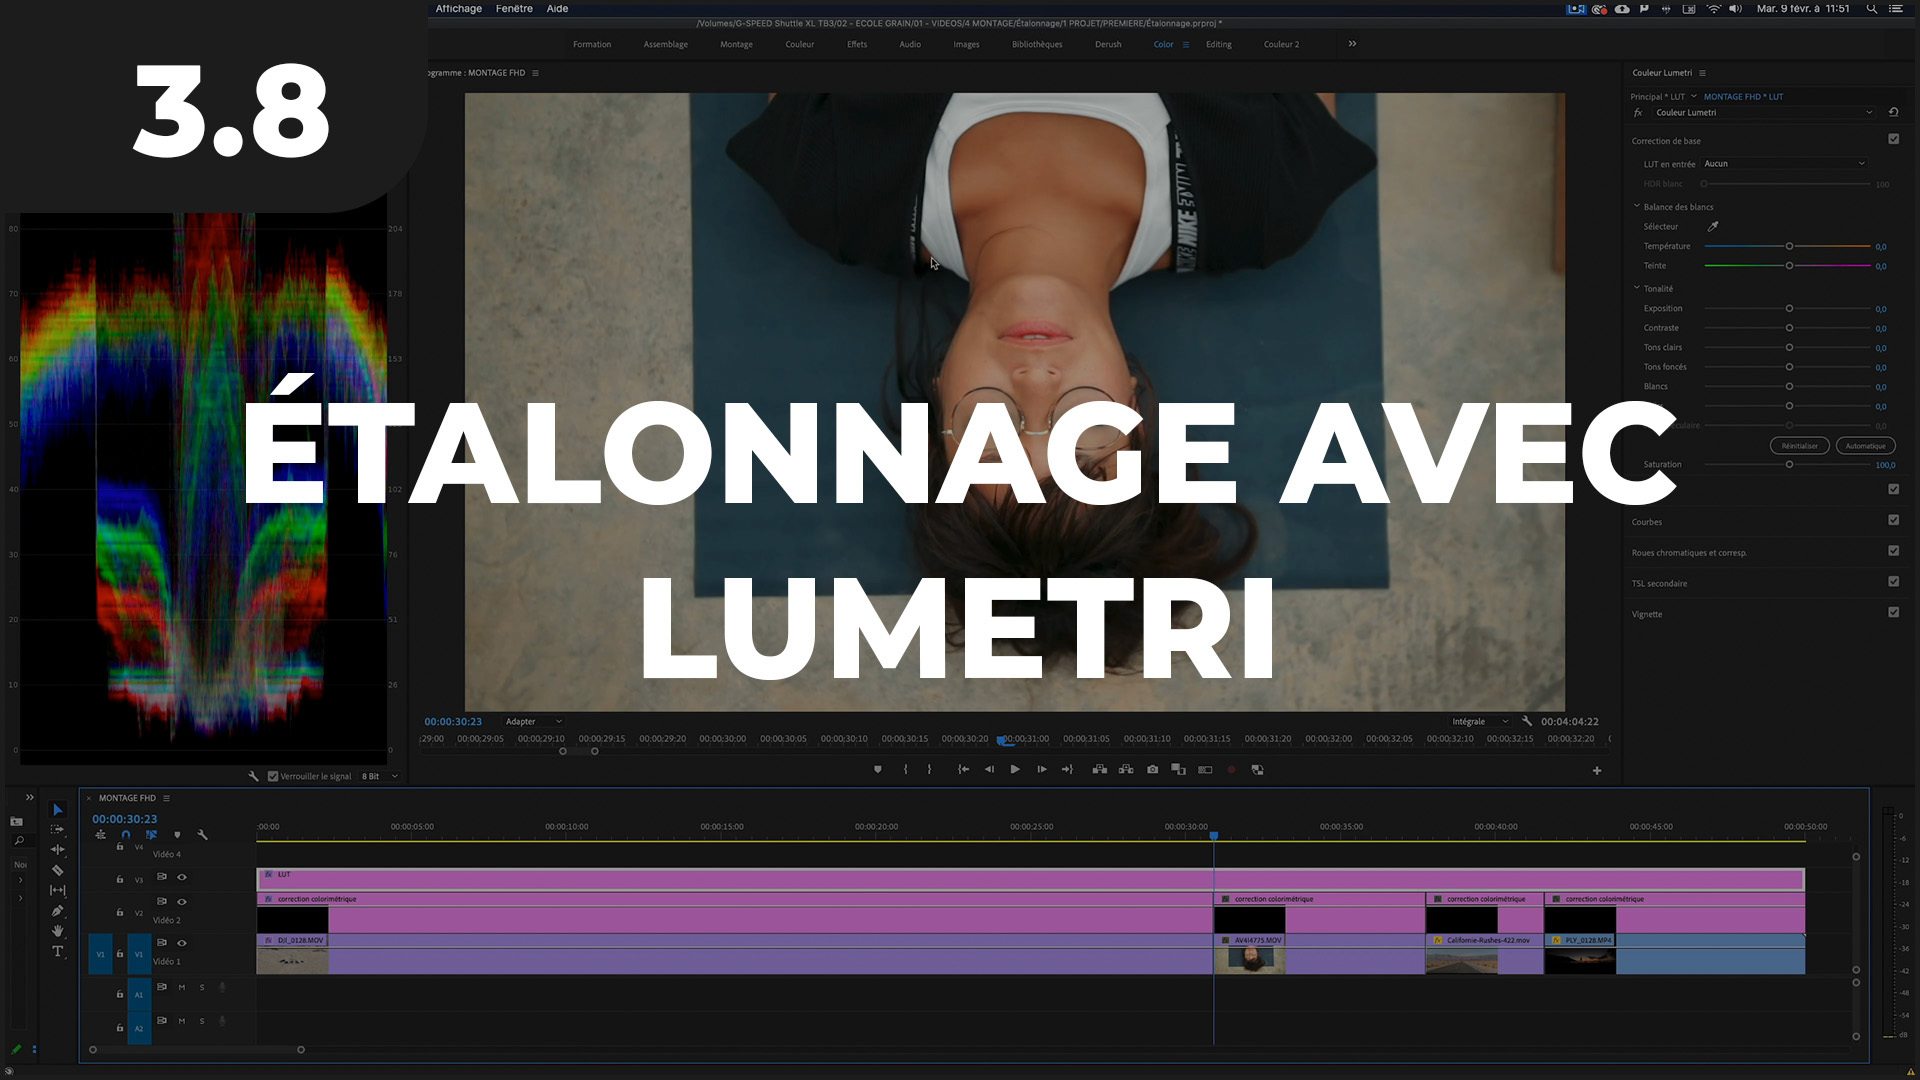 Etalonnage avec Lumetri sur Adobe Premiere Pro